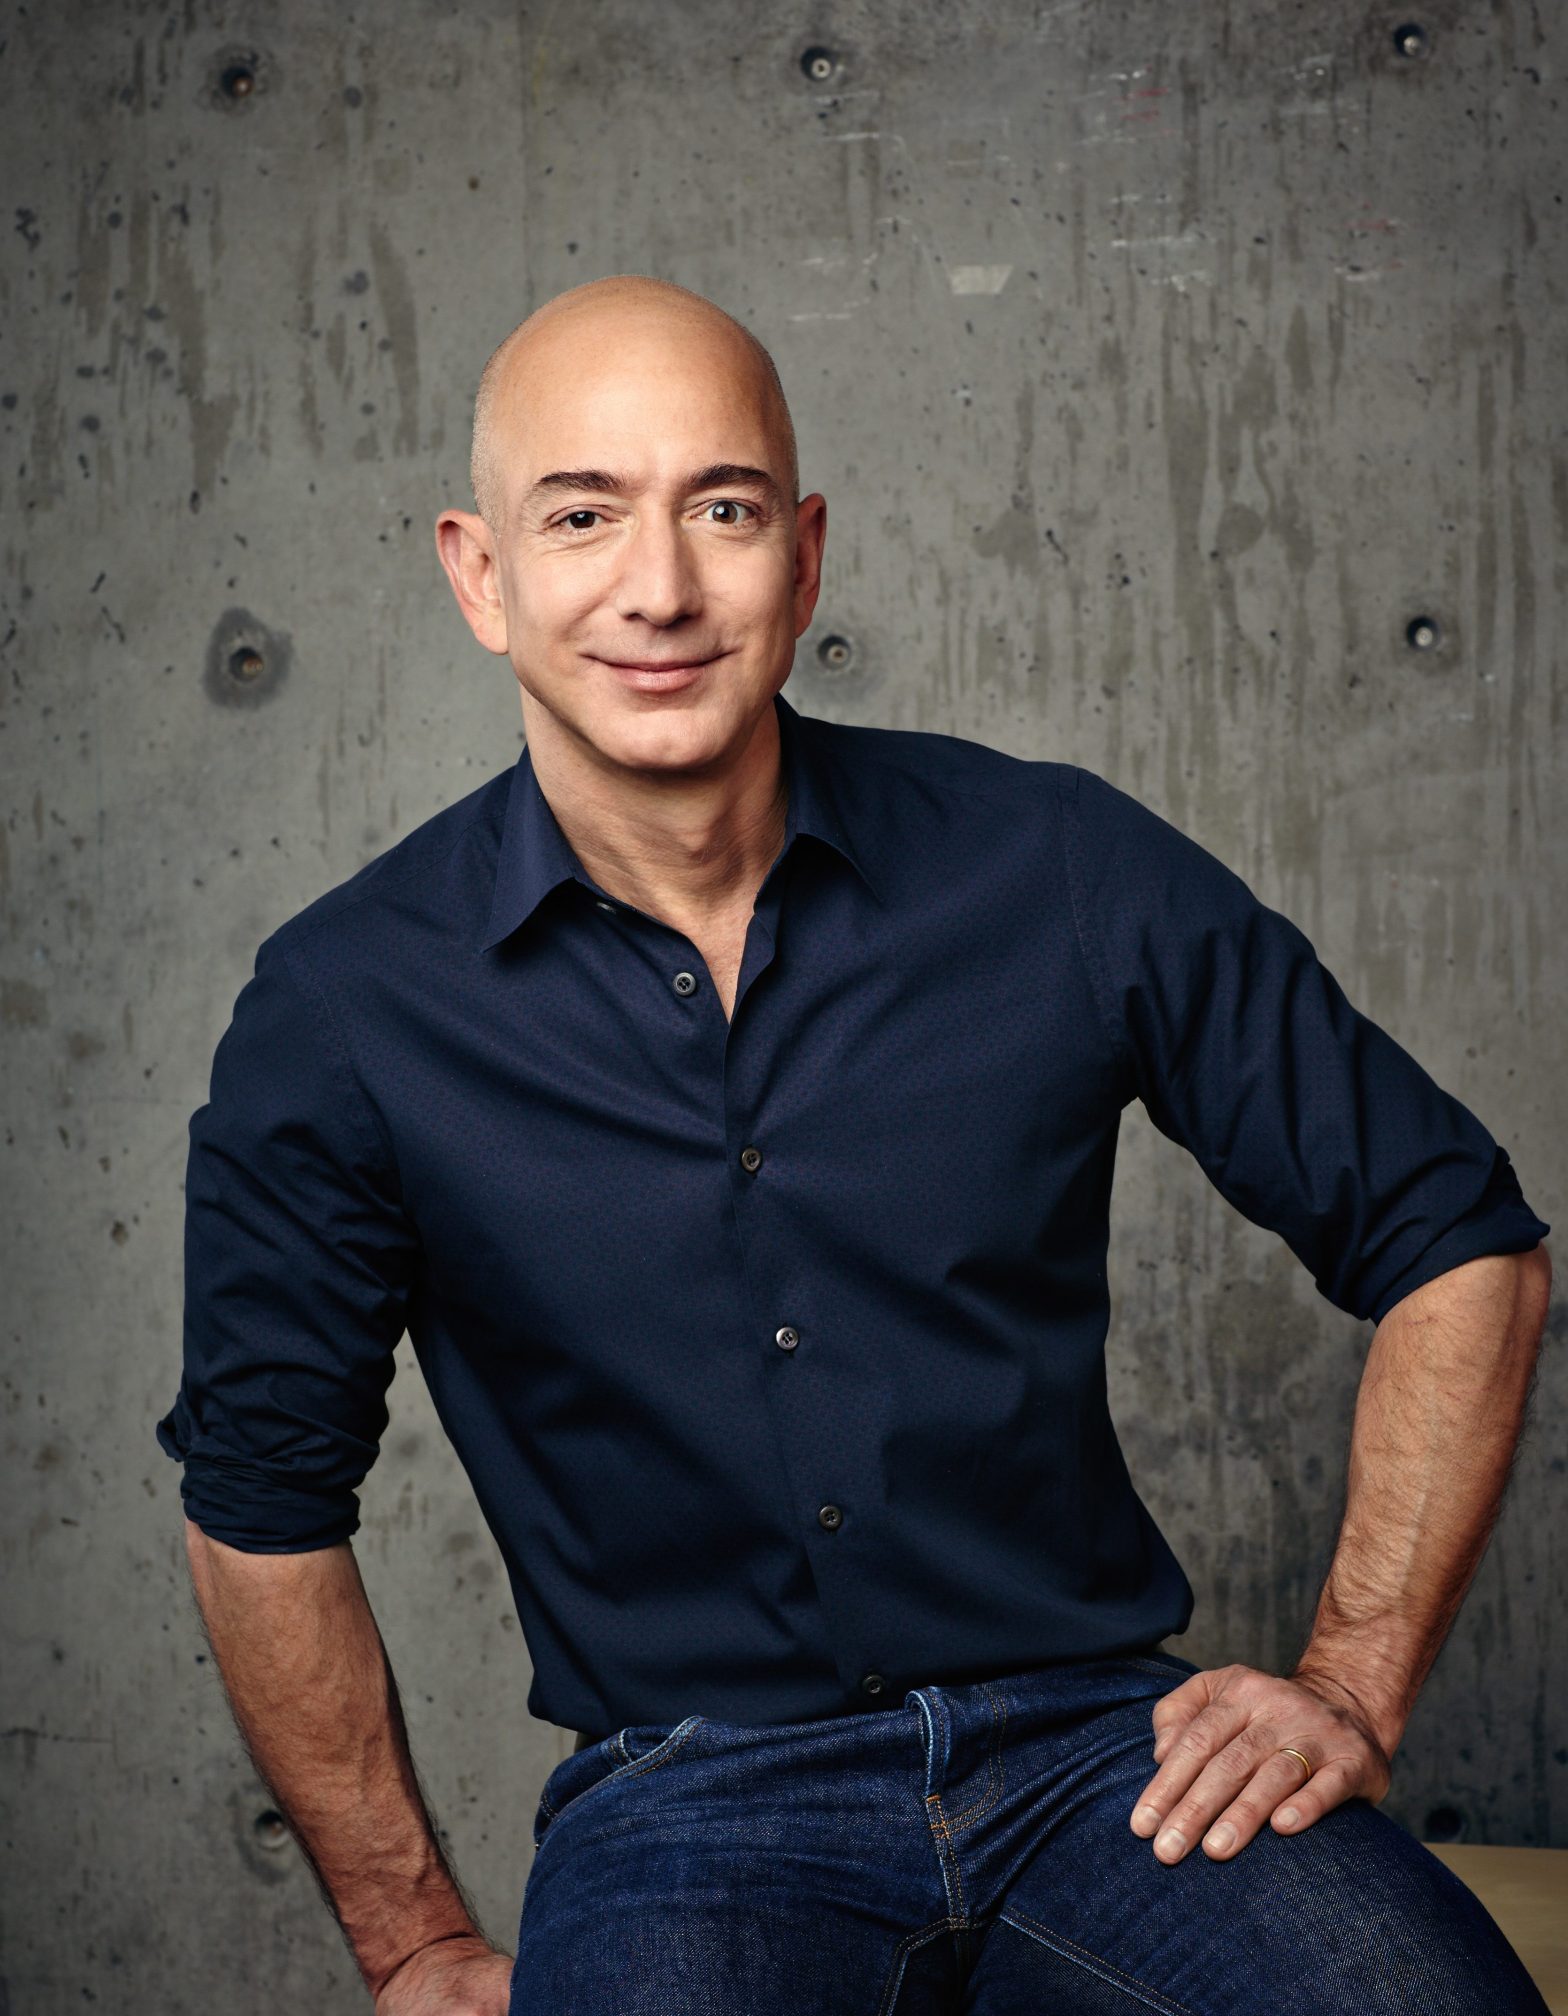 Jeff Bezos, Amazon’s Founder, Will Step Down as CEO